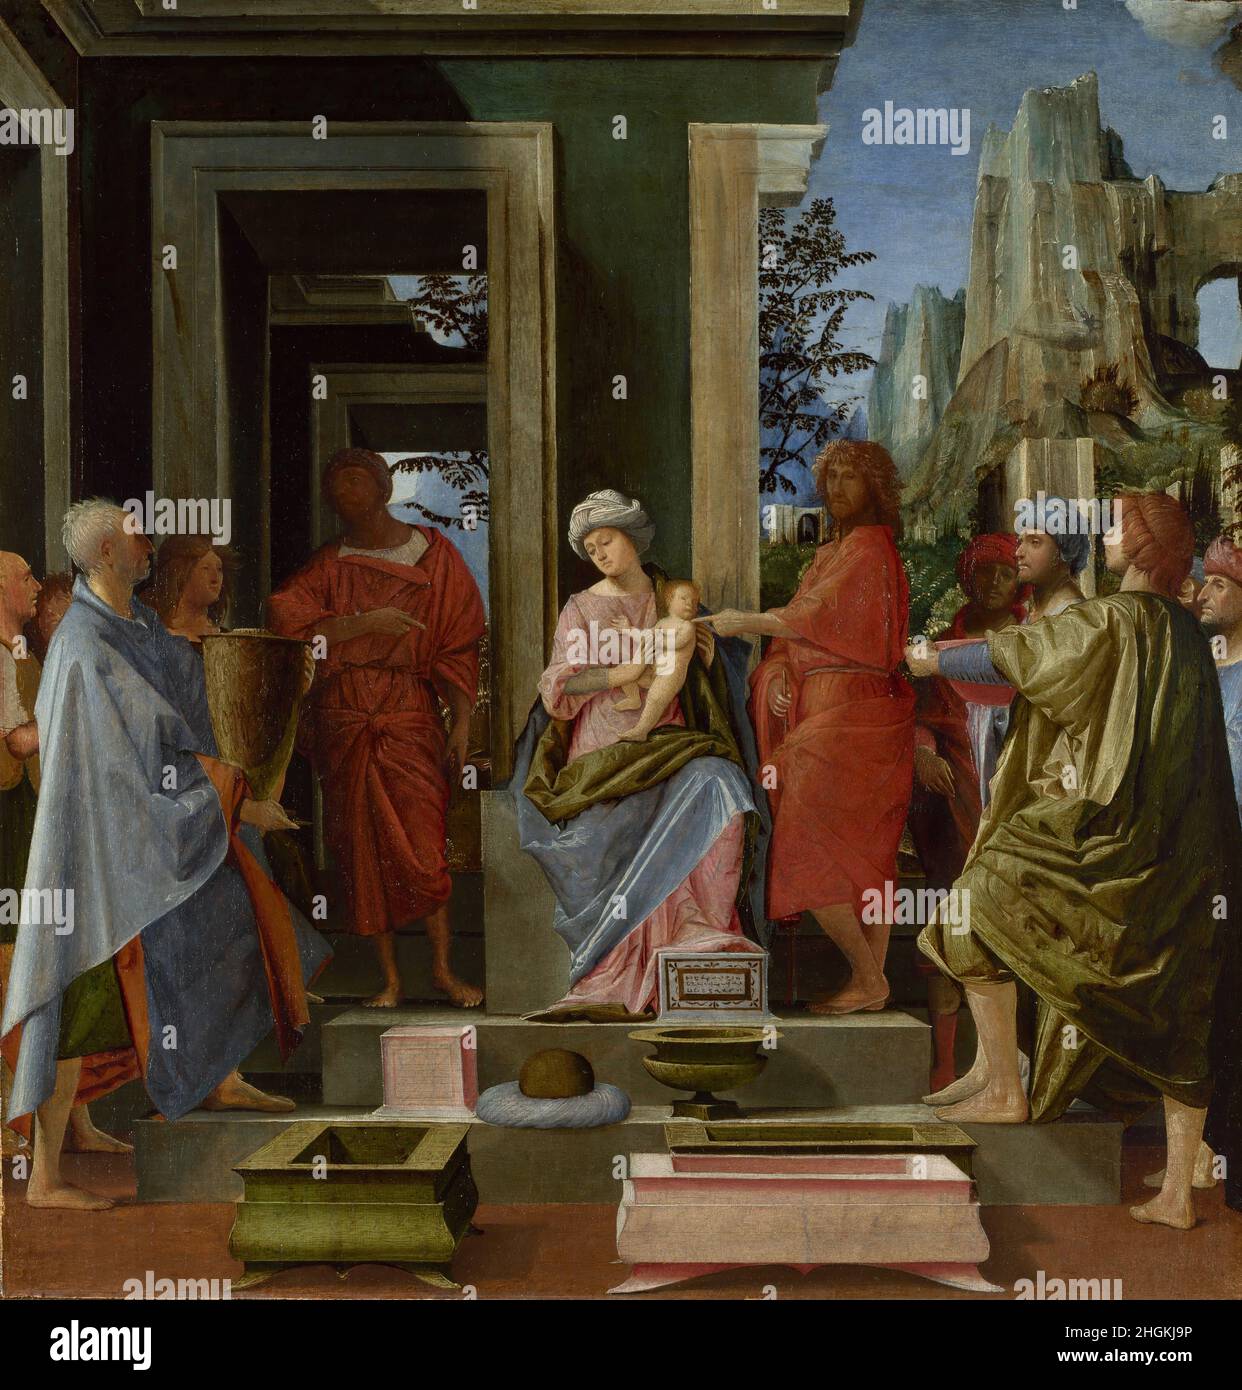 The Adoration of the Kings - 1500c. - oil on wood di pioppo 56,8 x 55 cm - Suardi Bartolomeo - Bramantino - Stock Photo